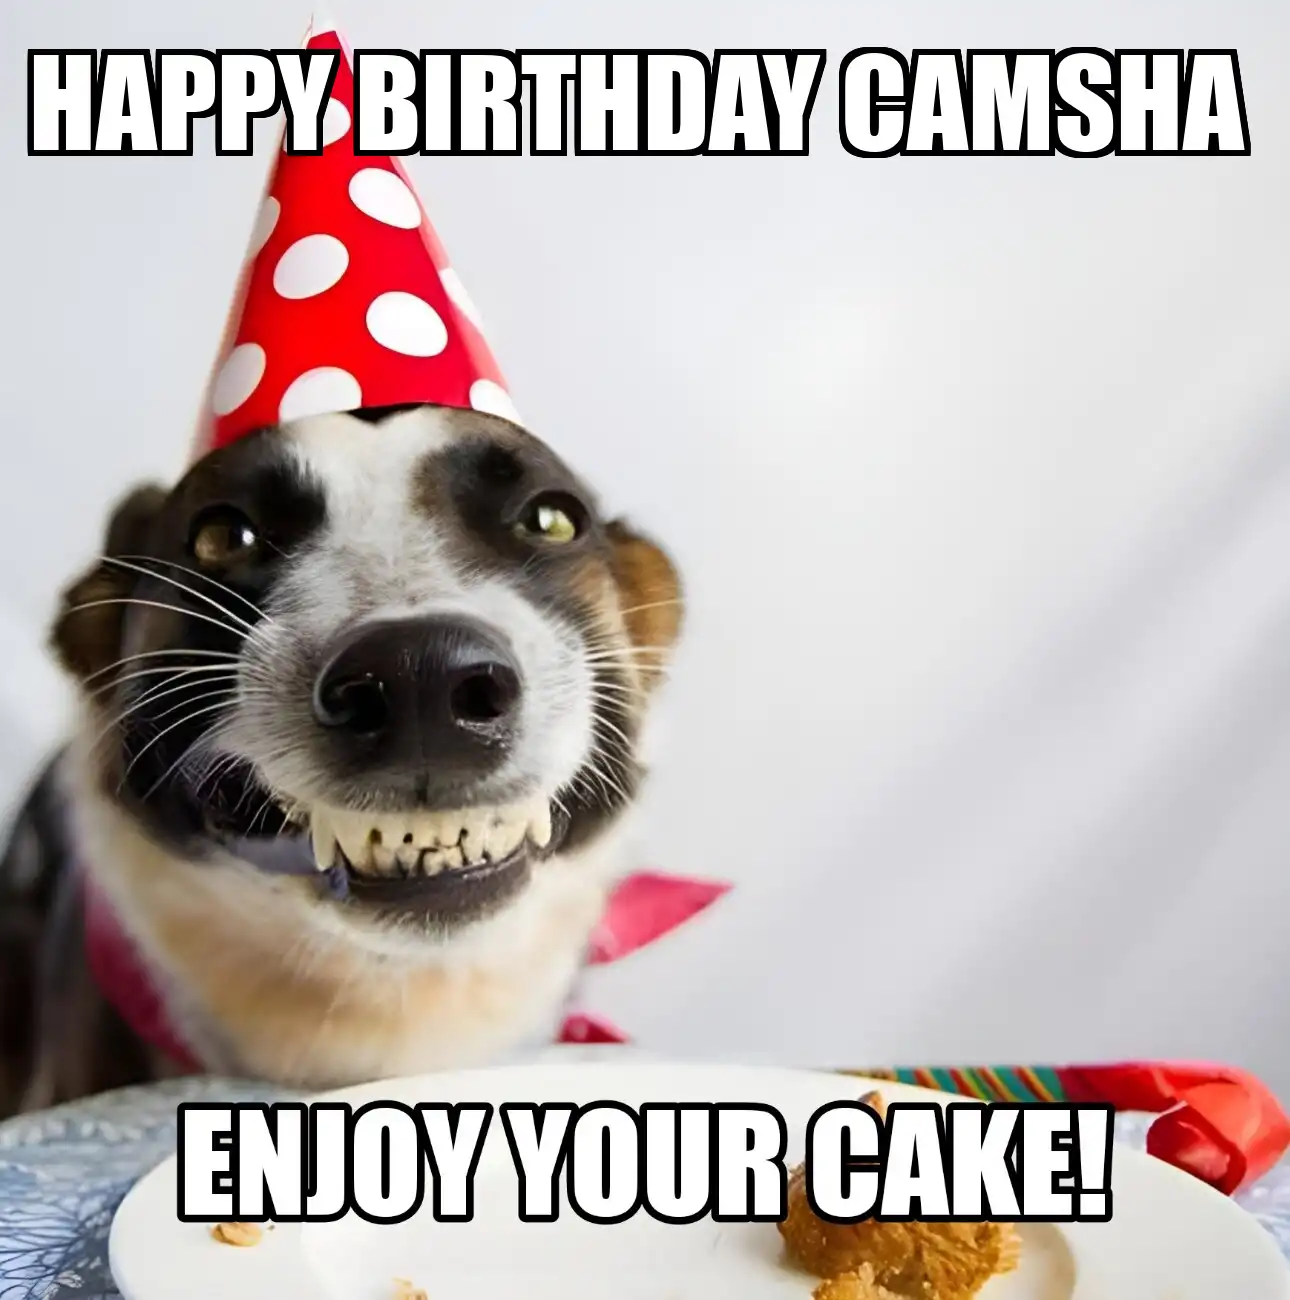 Happy Birthday Camsha Enjoy Your Cake Dog Meme